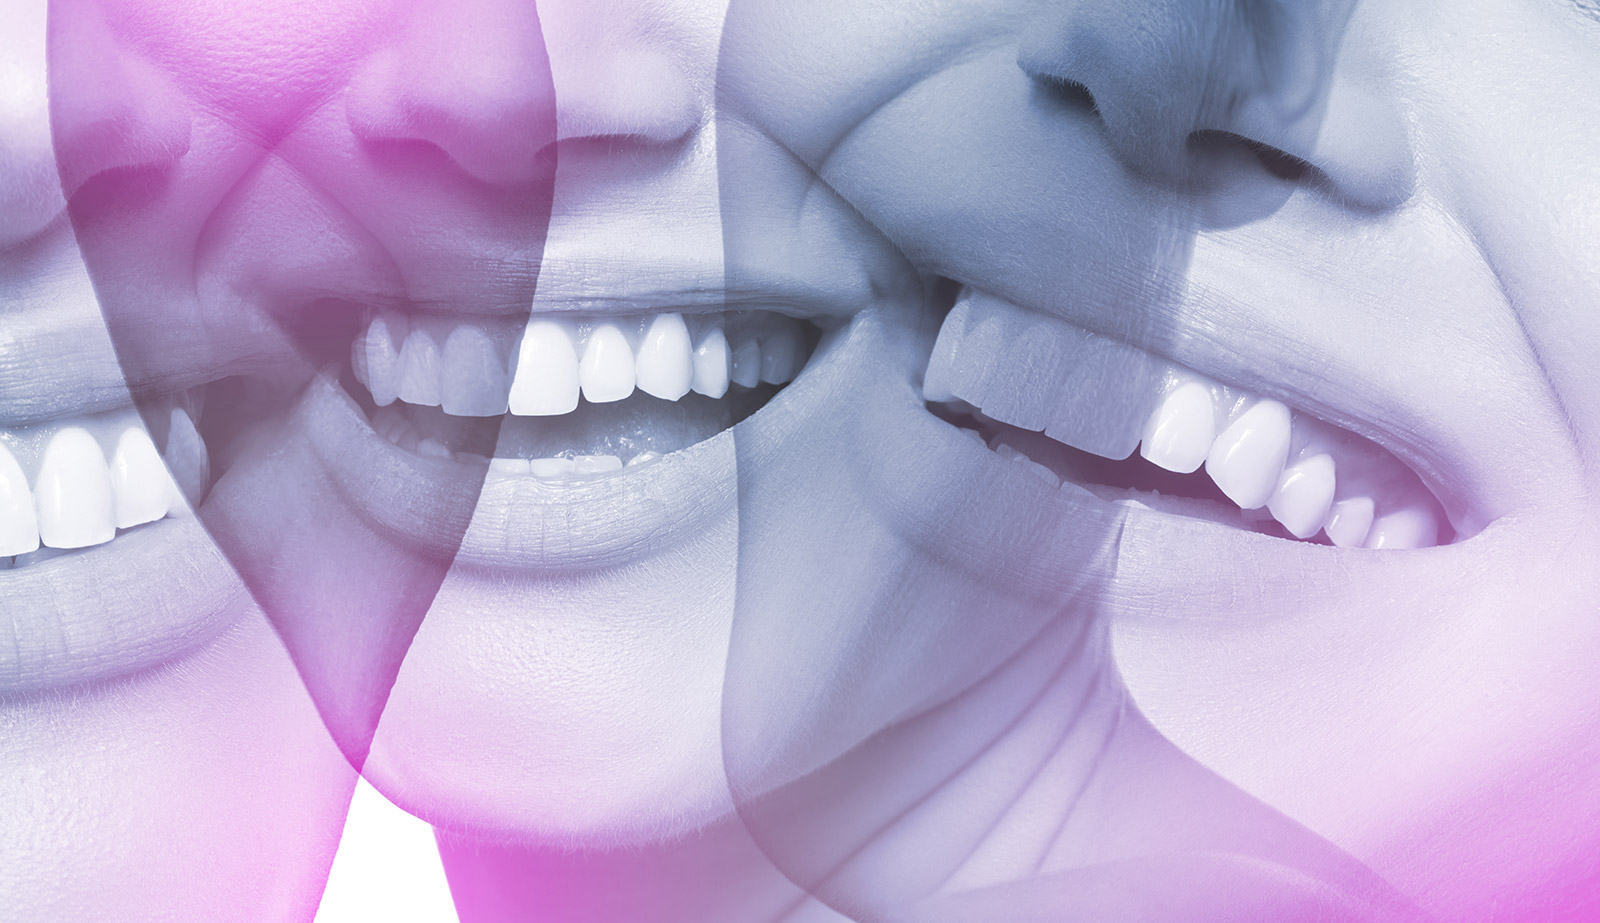 Smiles By Design - Success with Zirconia - Burbank Dental Lab